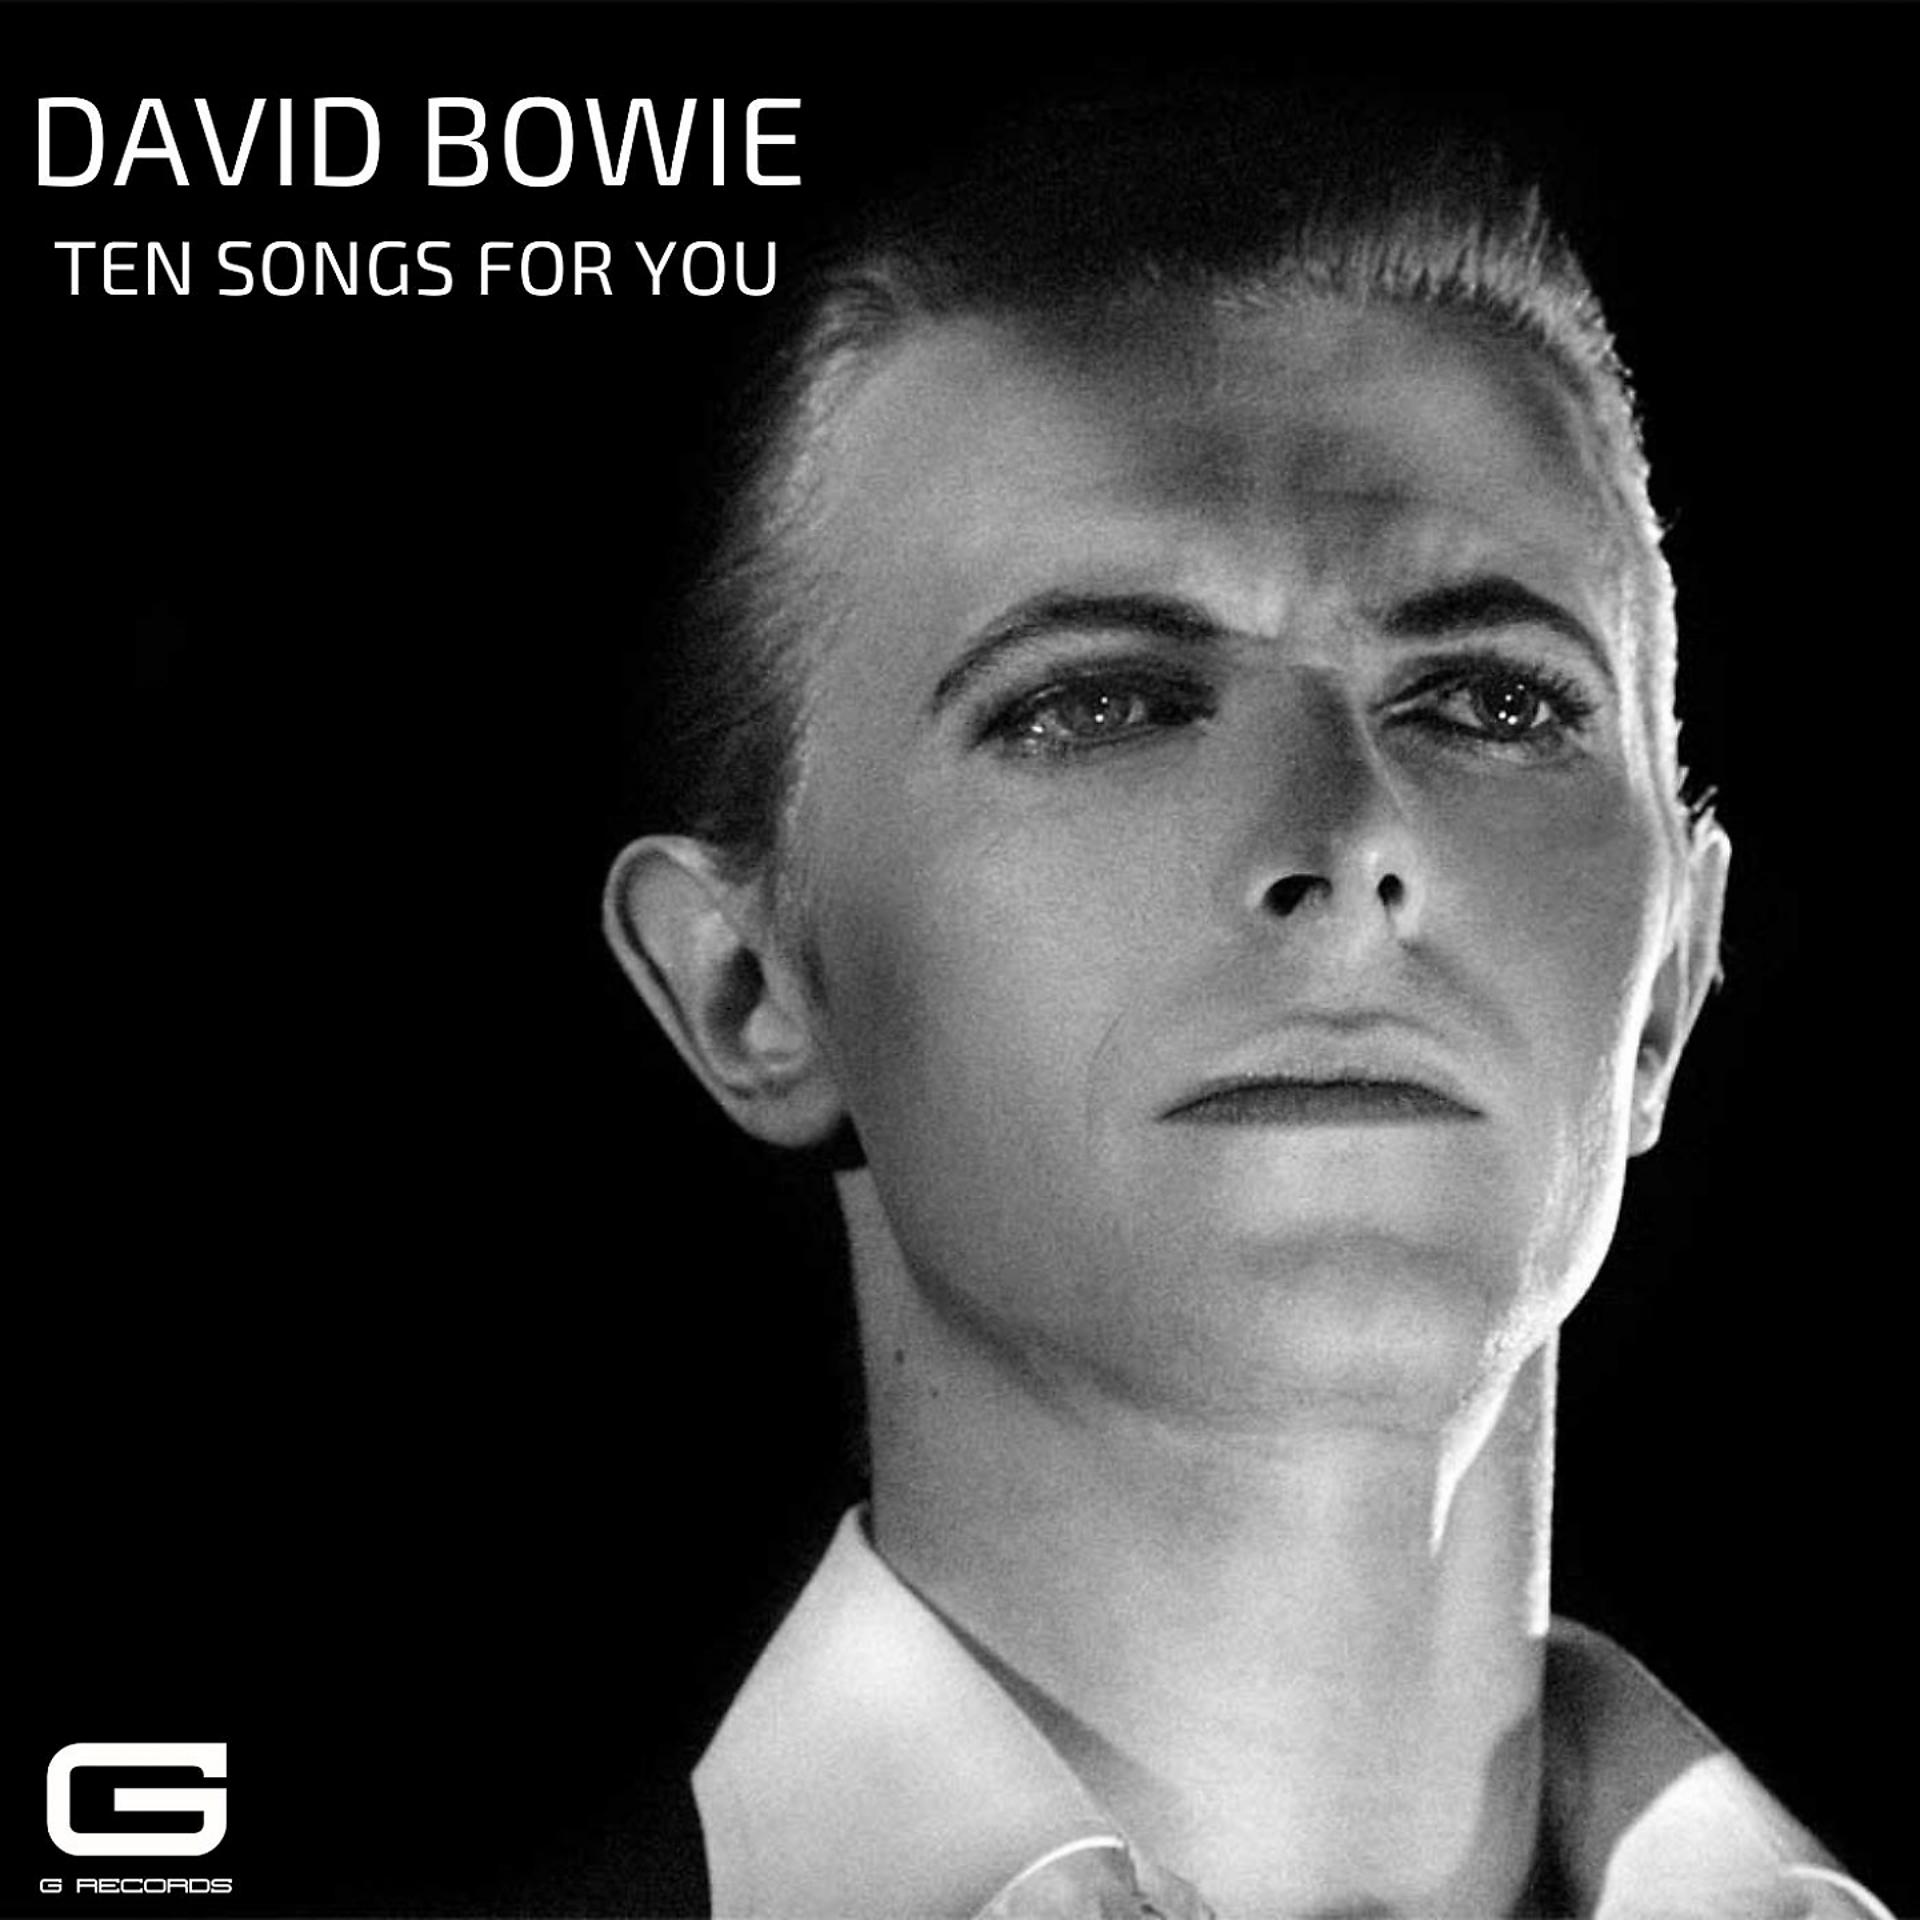 Постер к треку David Bowie - The width of a circle